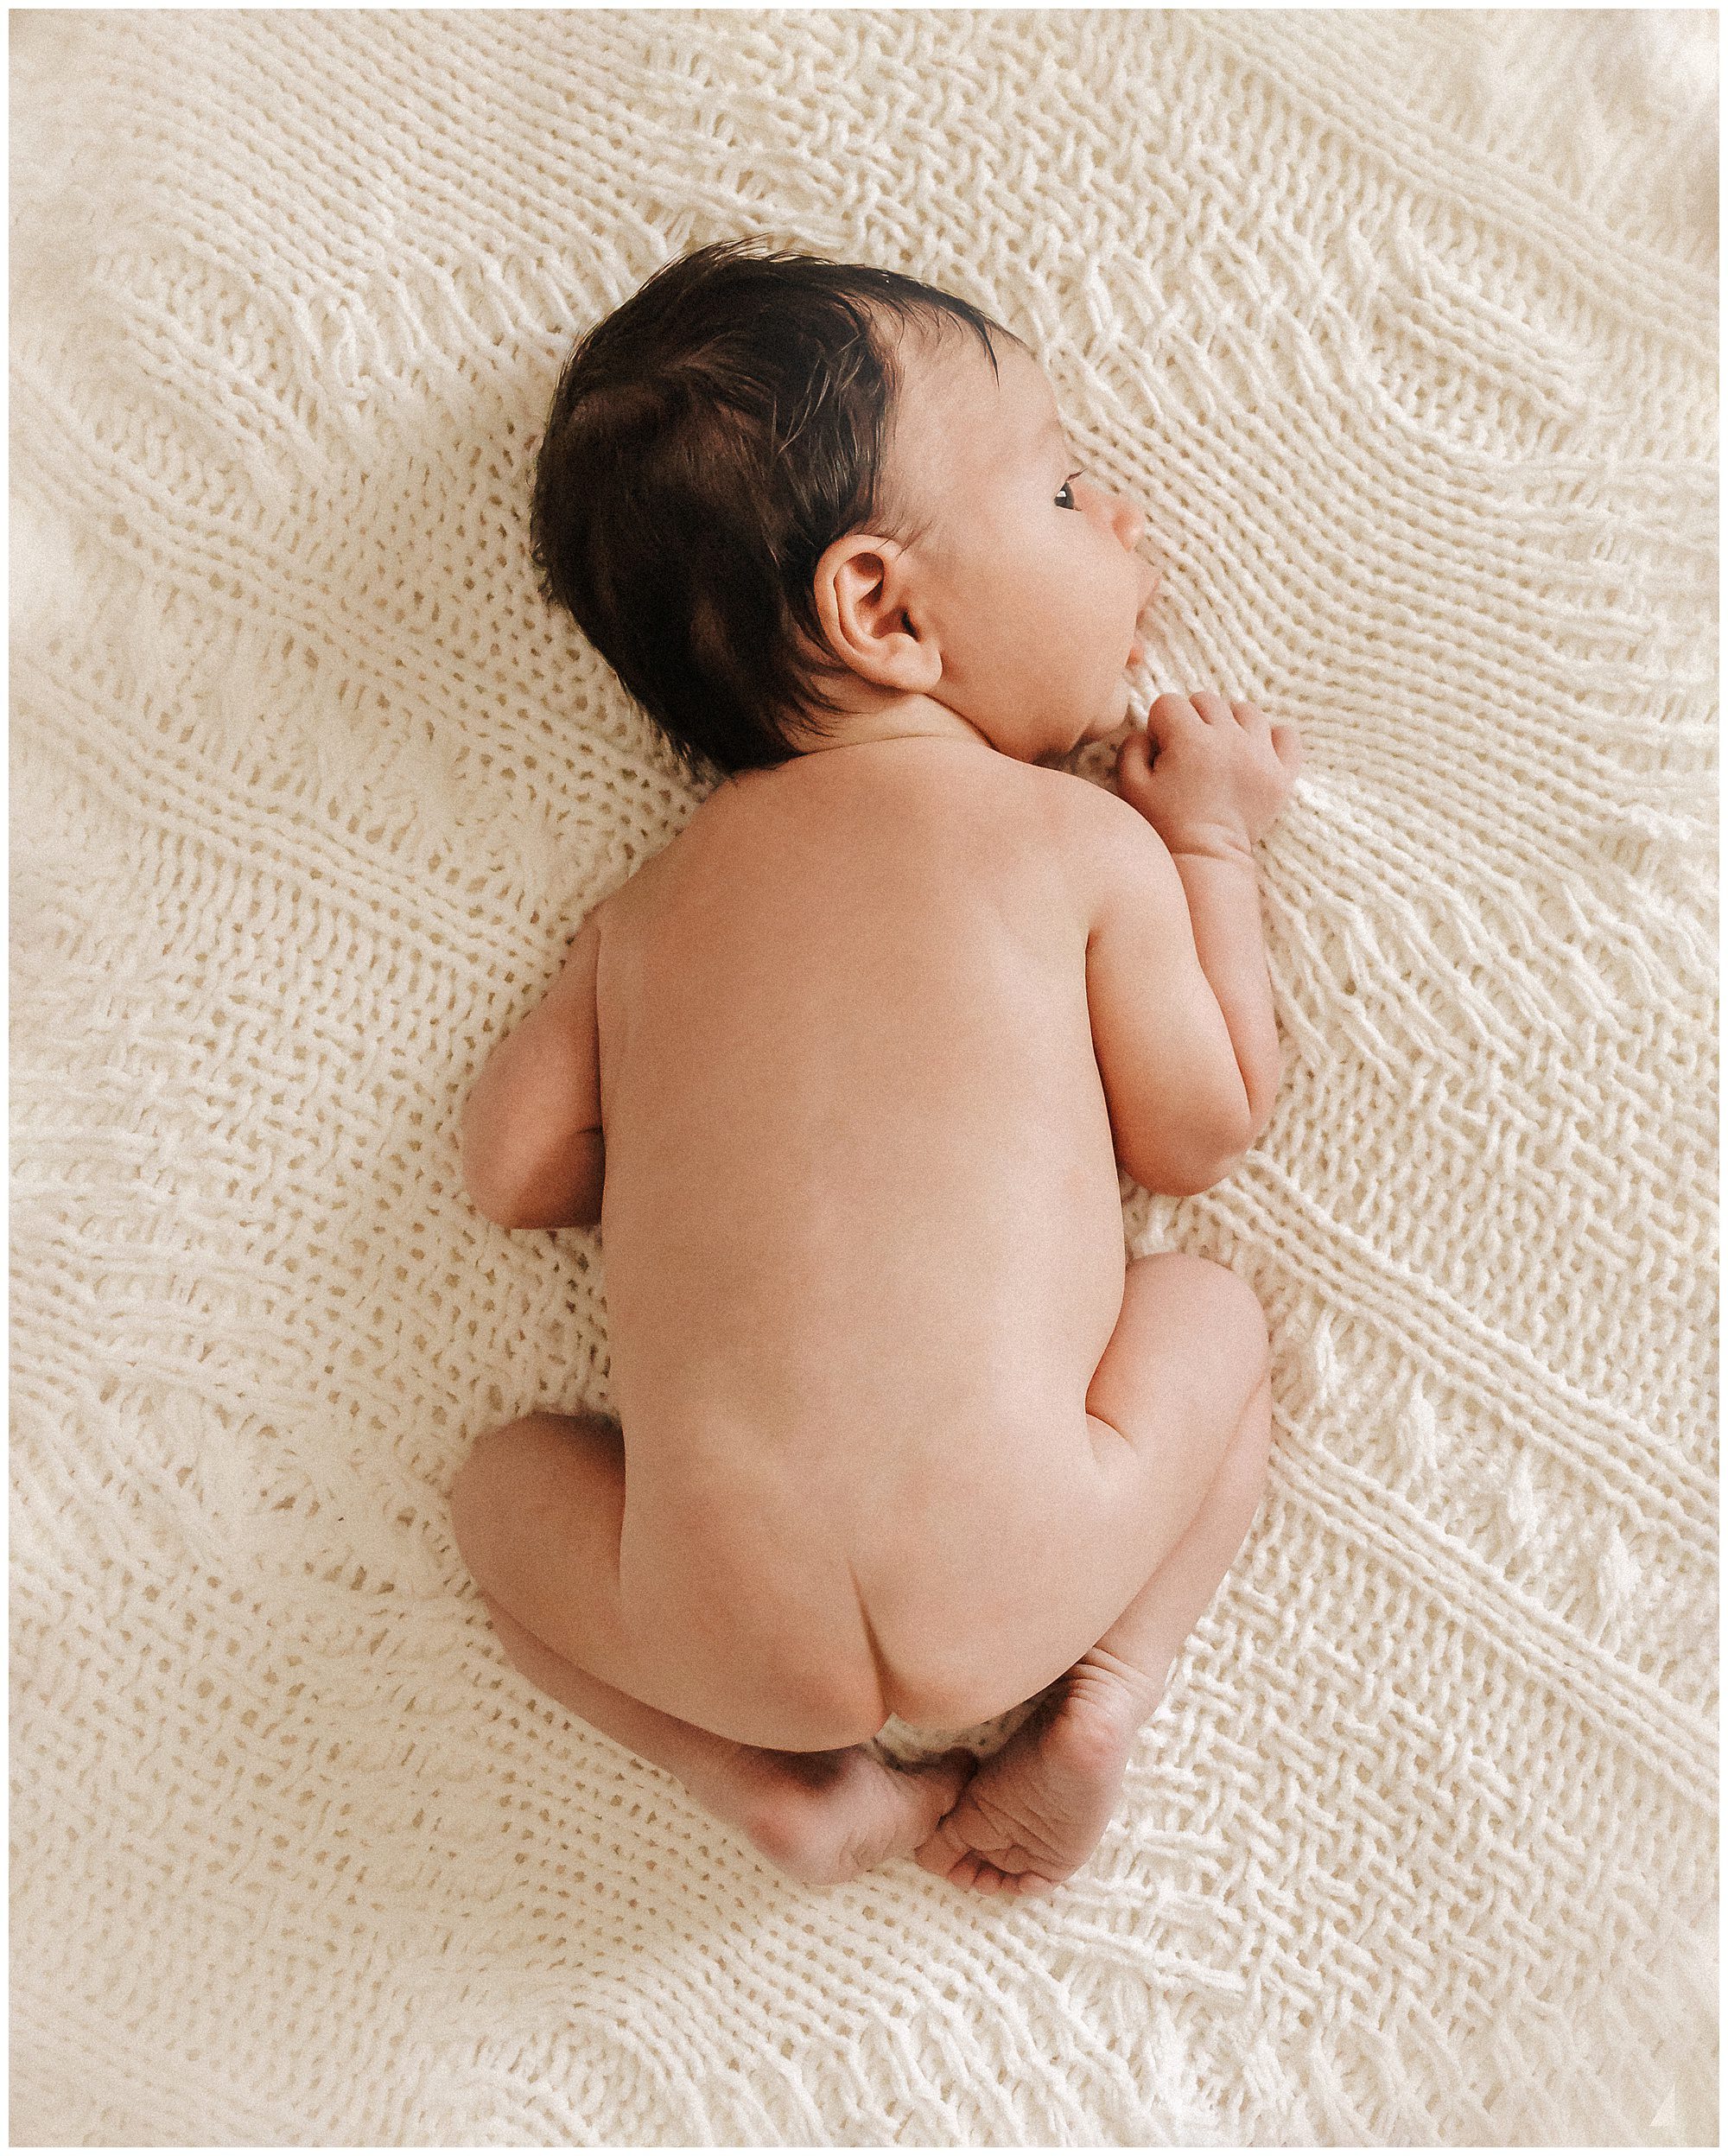 Naked Newborn Baby Boy with Dark Hair during Lifestyle Newborn Session